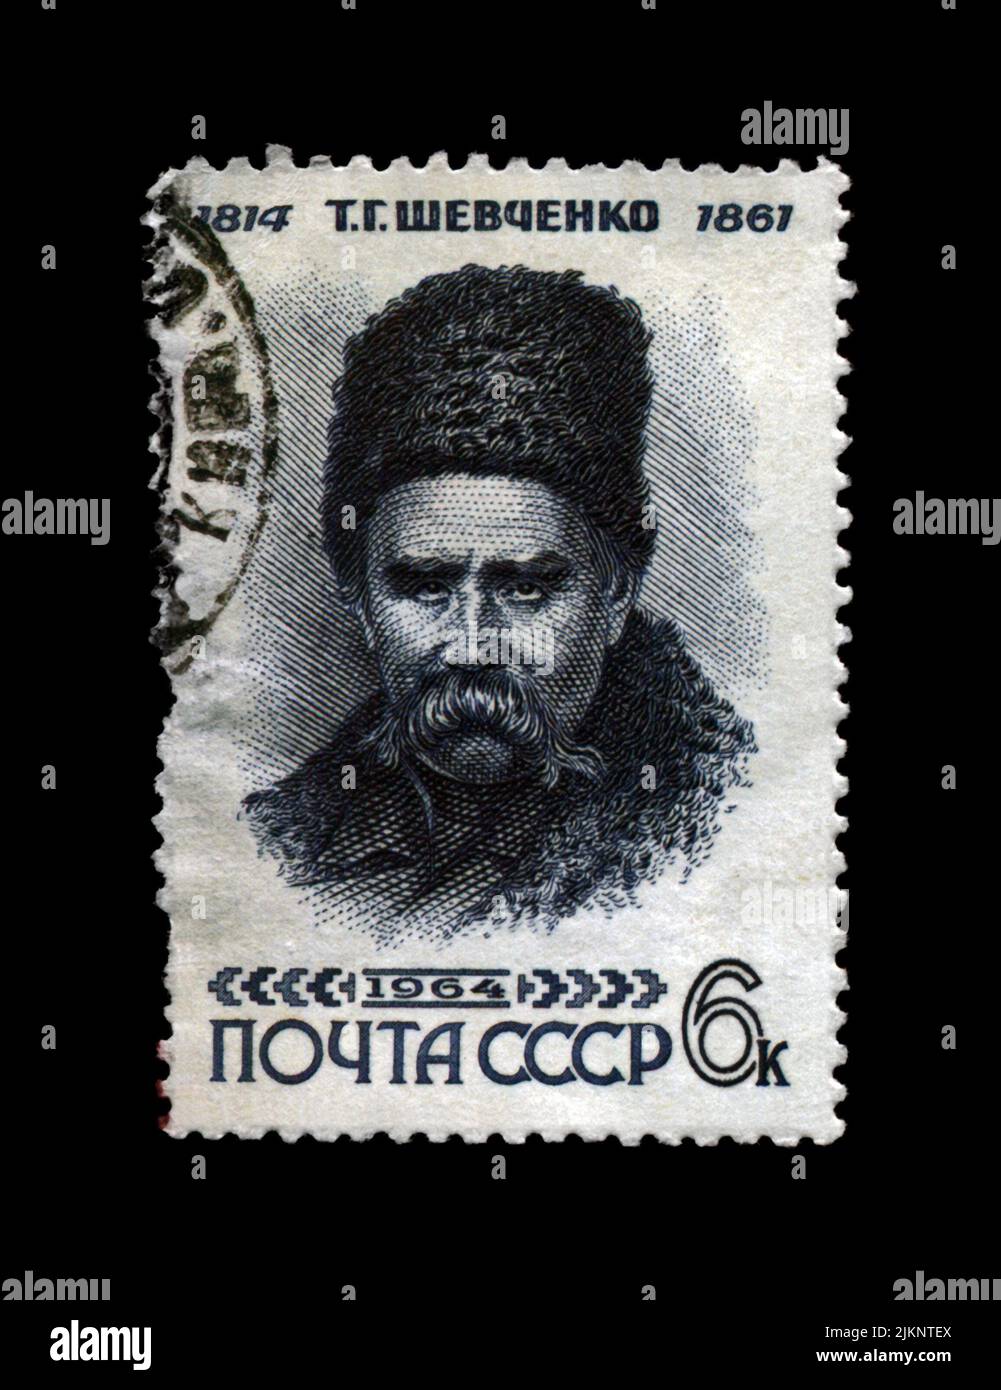 Taras Shevchenko, famous ukrainian poet, circa 1964. 150th birth anniversary. vintage postal stamp printed in the USSR isolated on black background. Stock Photo